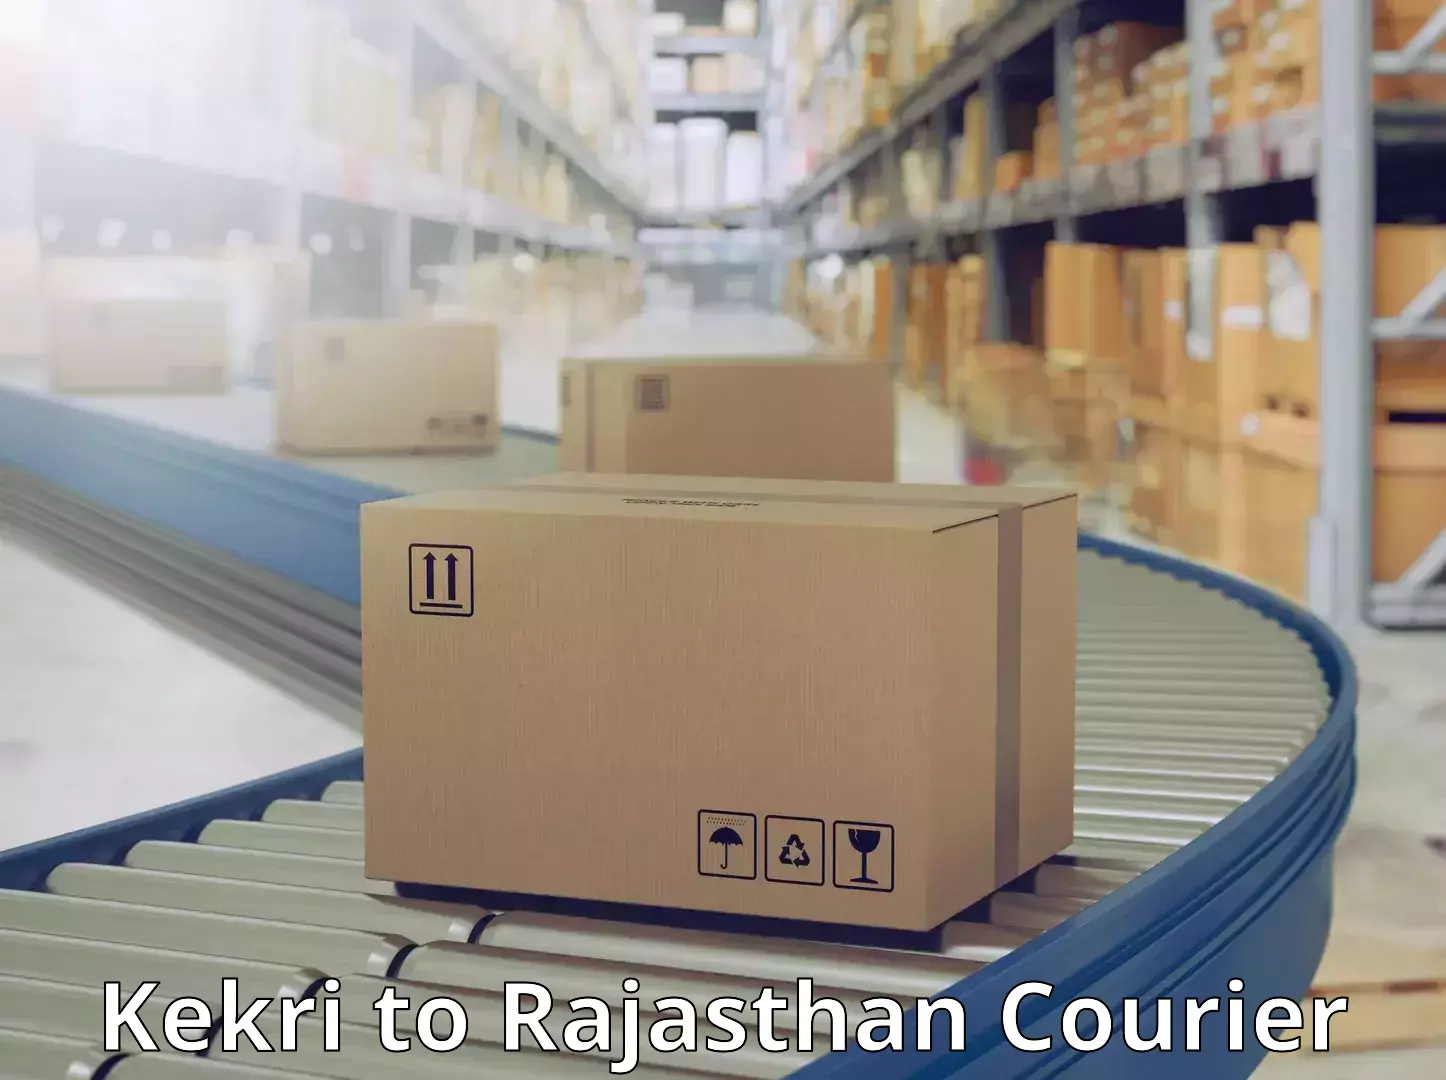 Digital shipping tools Kekri to Jaipur